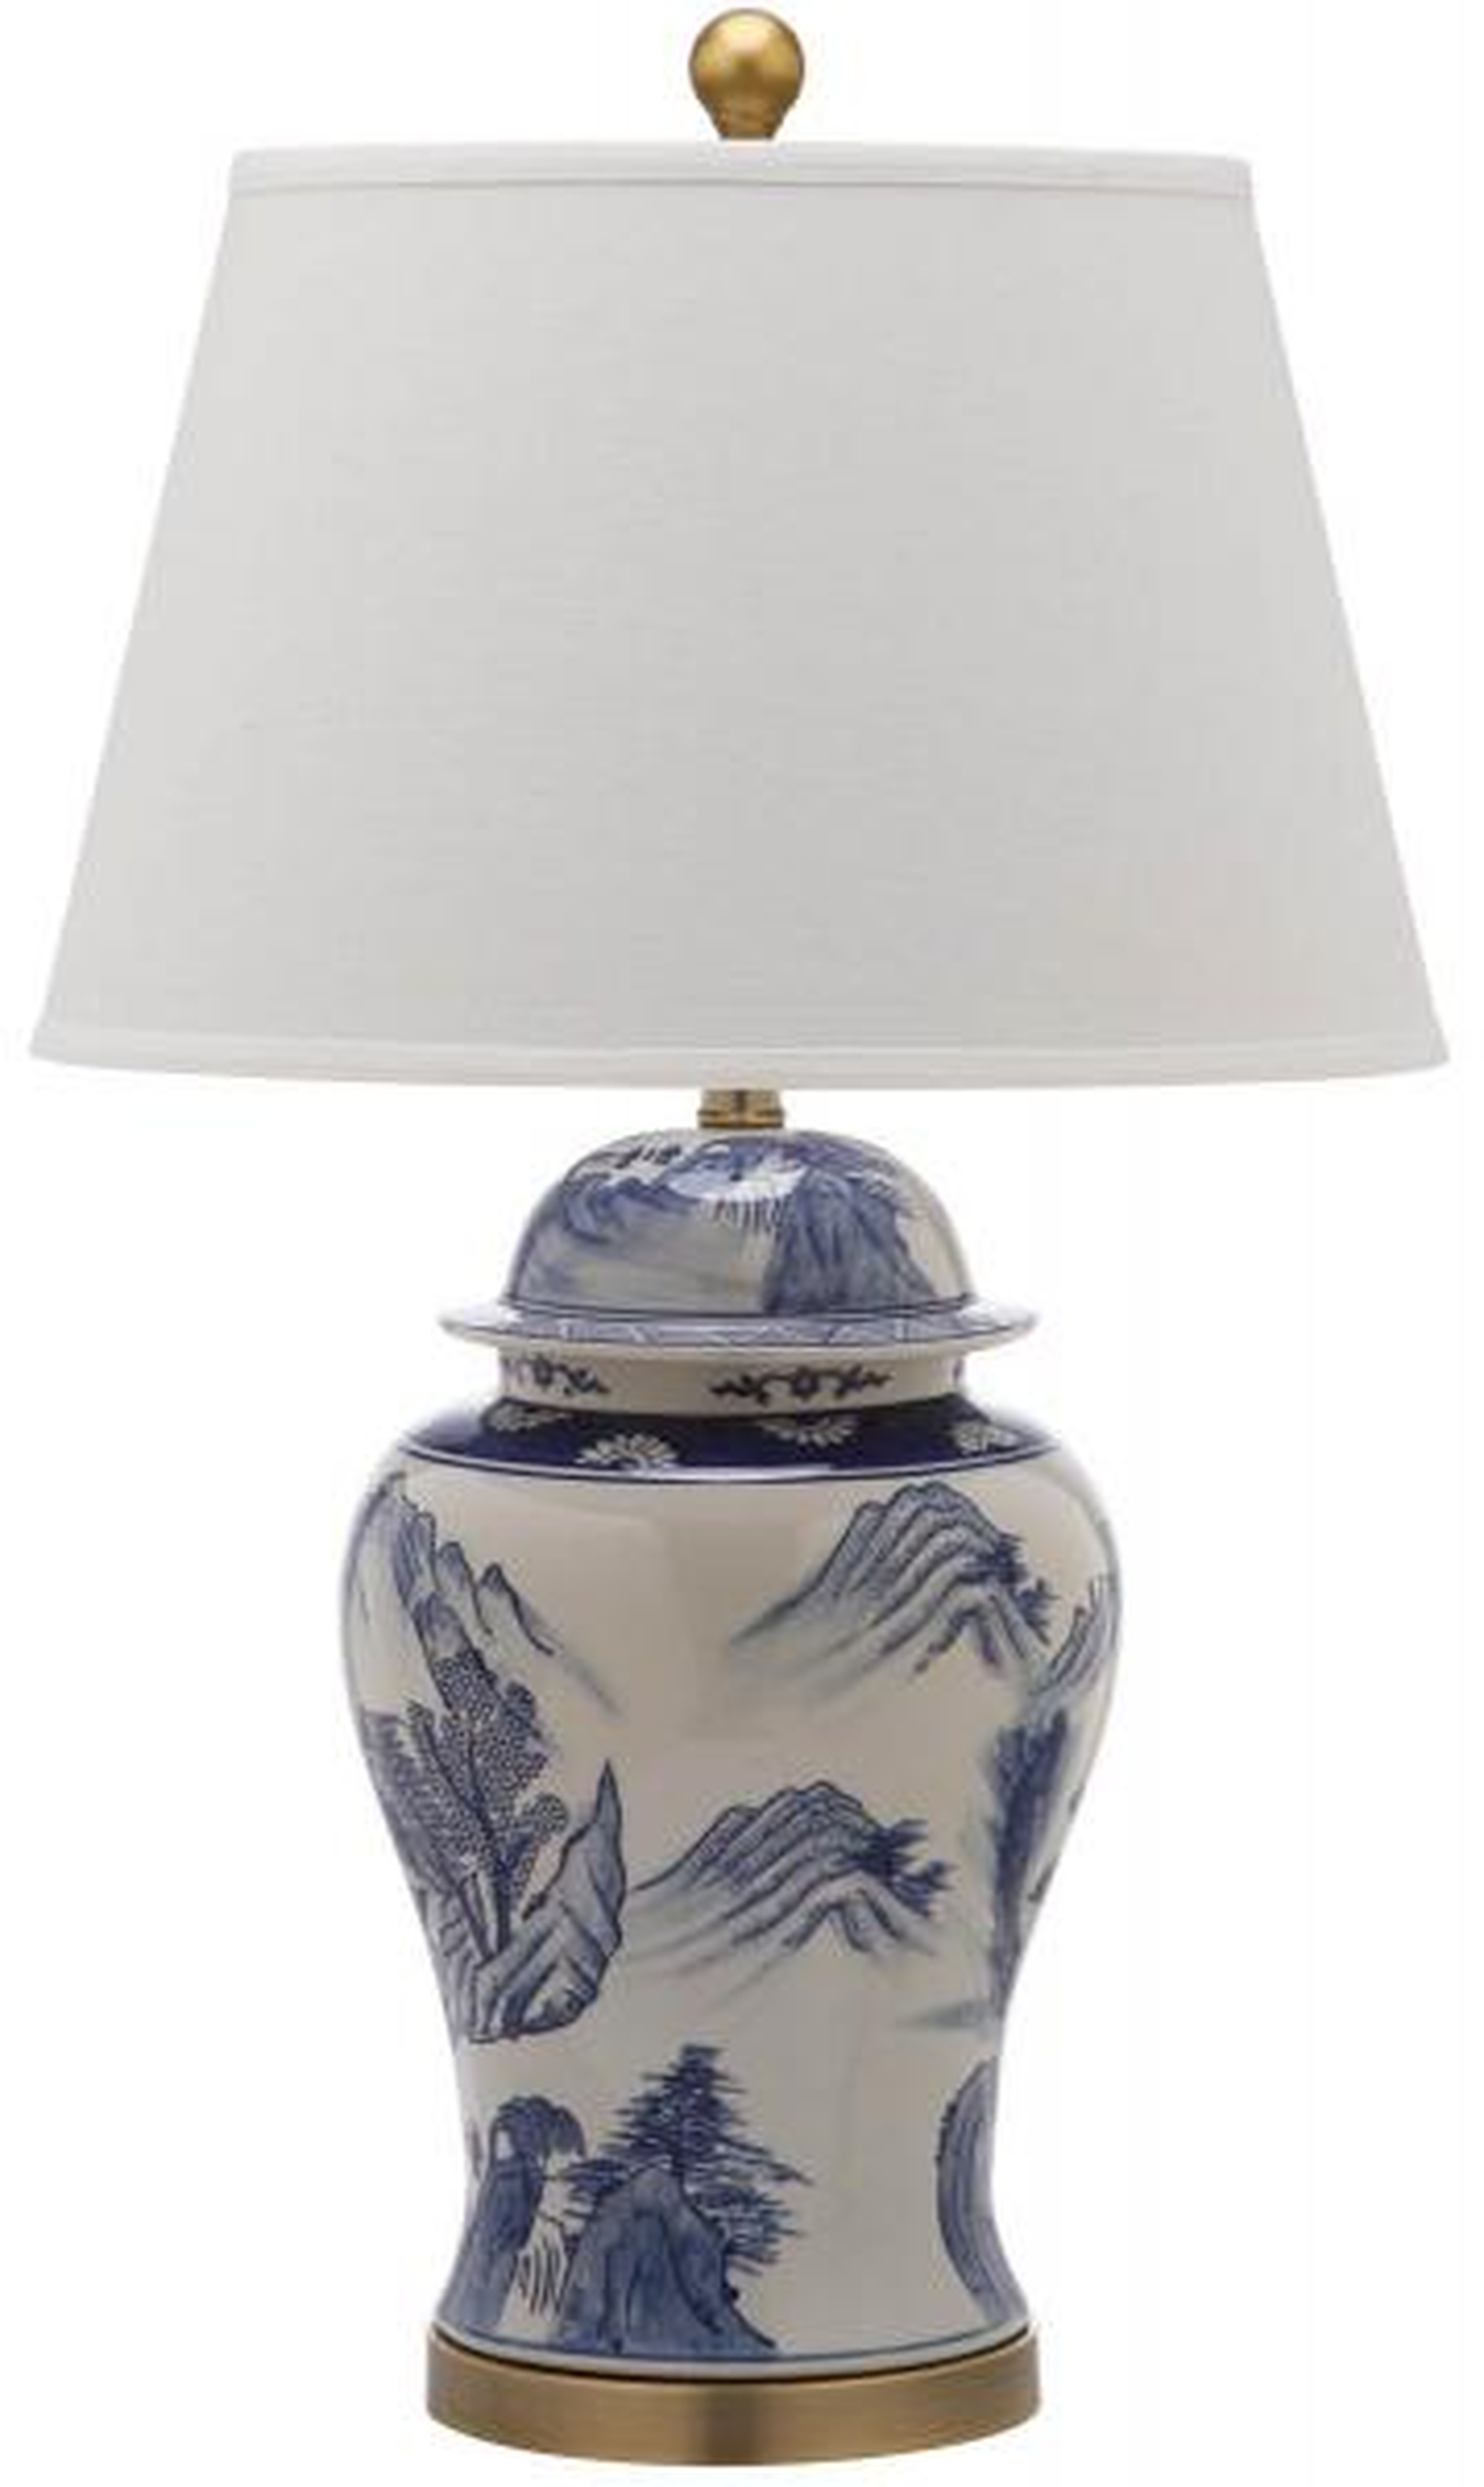 Shanghai 29.5-Inch H Ginger Jar Table Lamp - Blue/White - Safavieh - Arlo Home